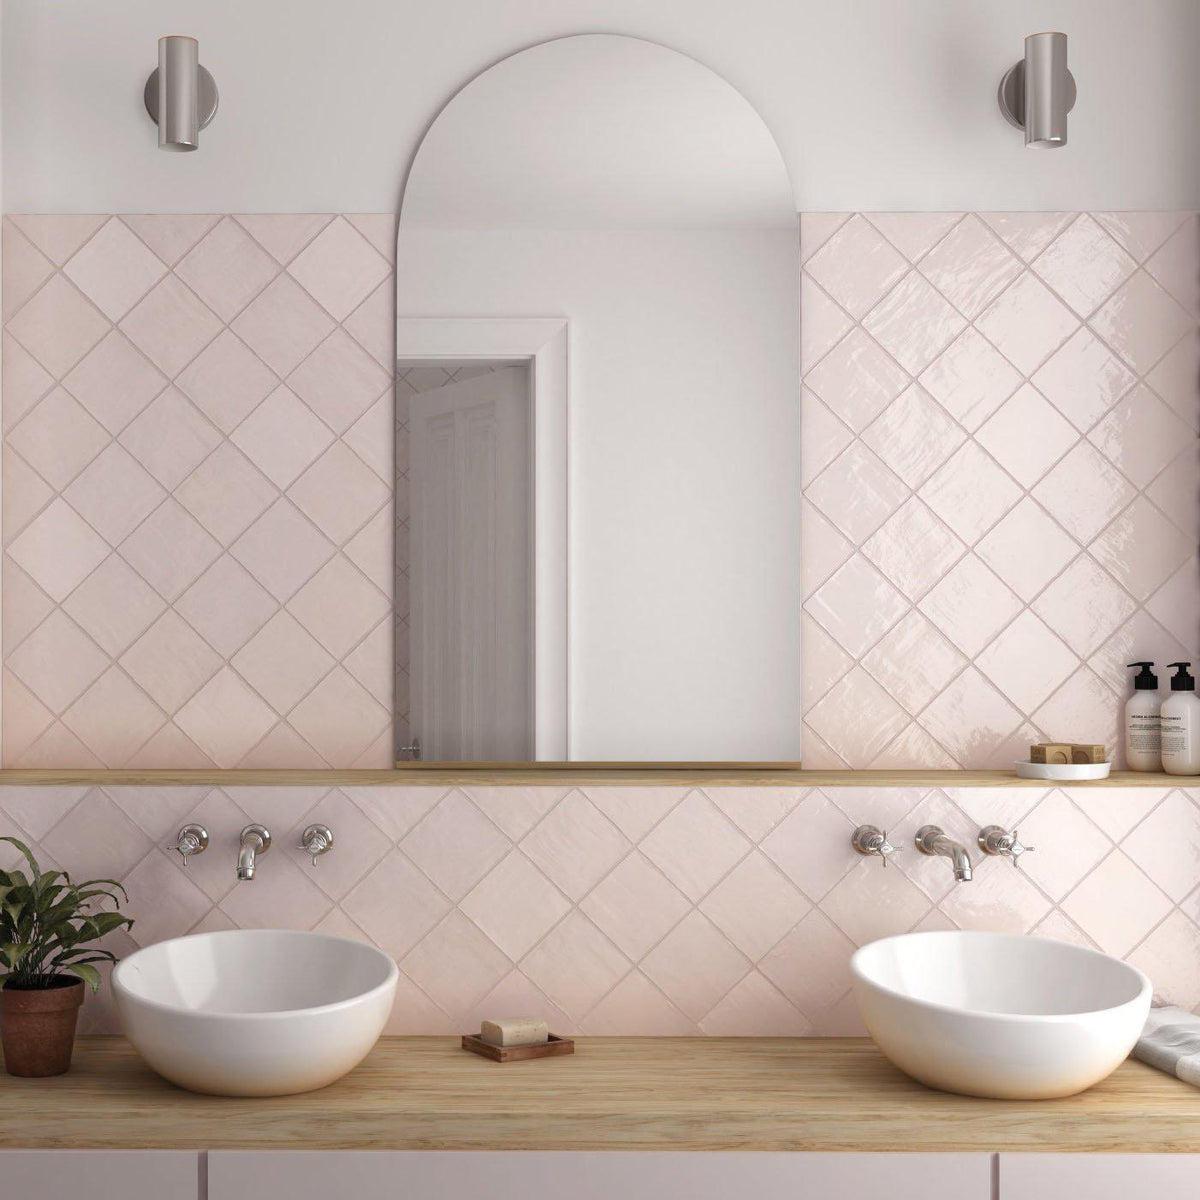 La Riviera Rose 5x5 Blush Pink Ceramic Tile for a Mid Century Modern Bathroom Design | Tile Club